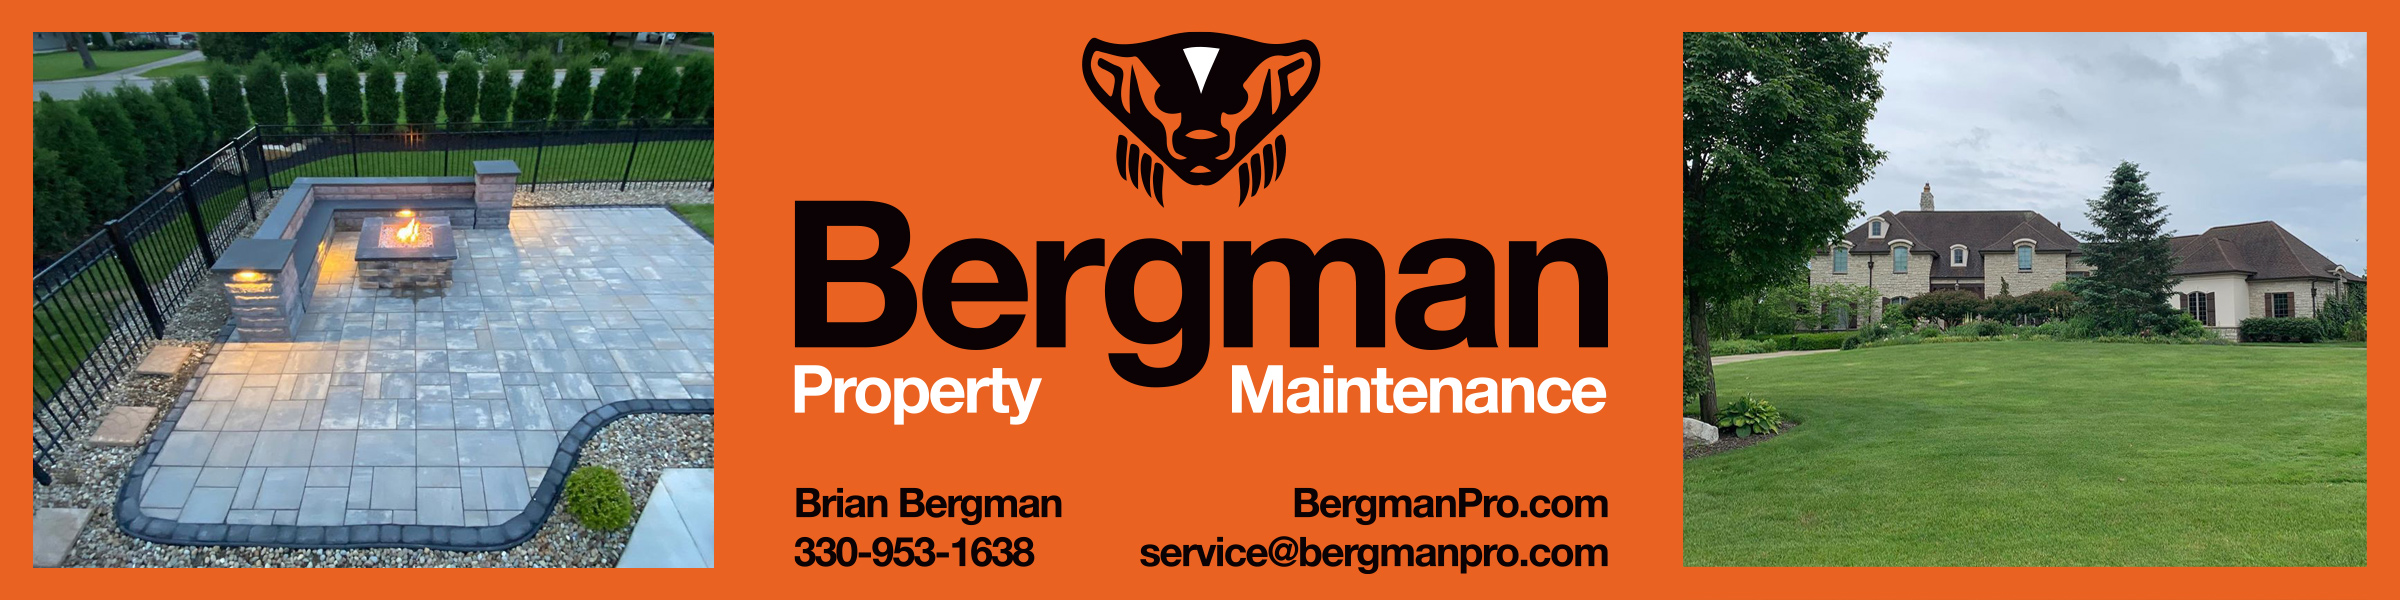 Bergman Property Maintenance